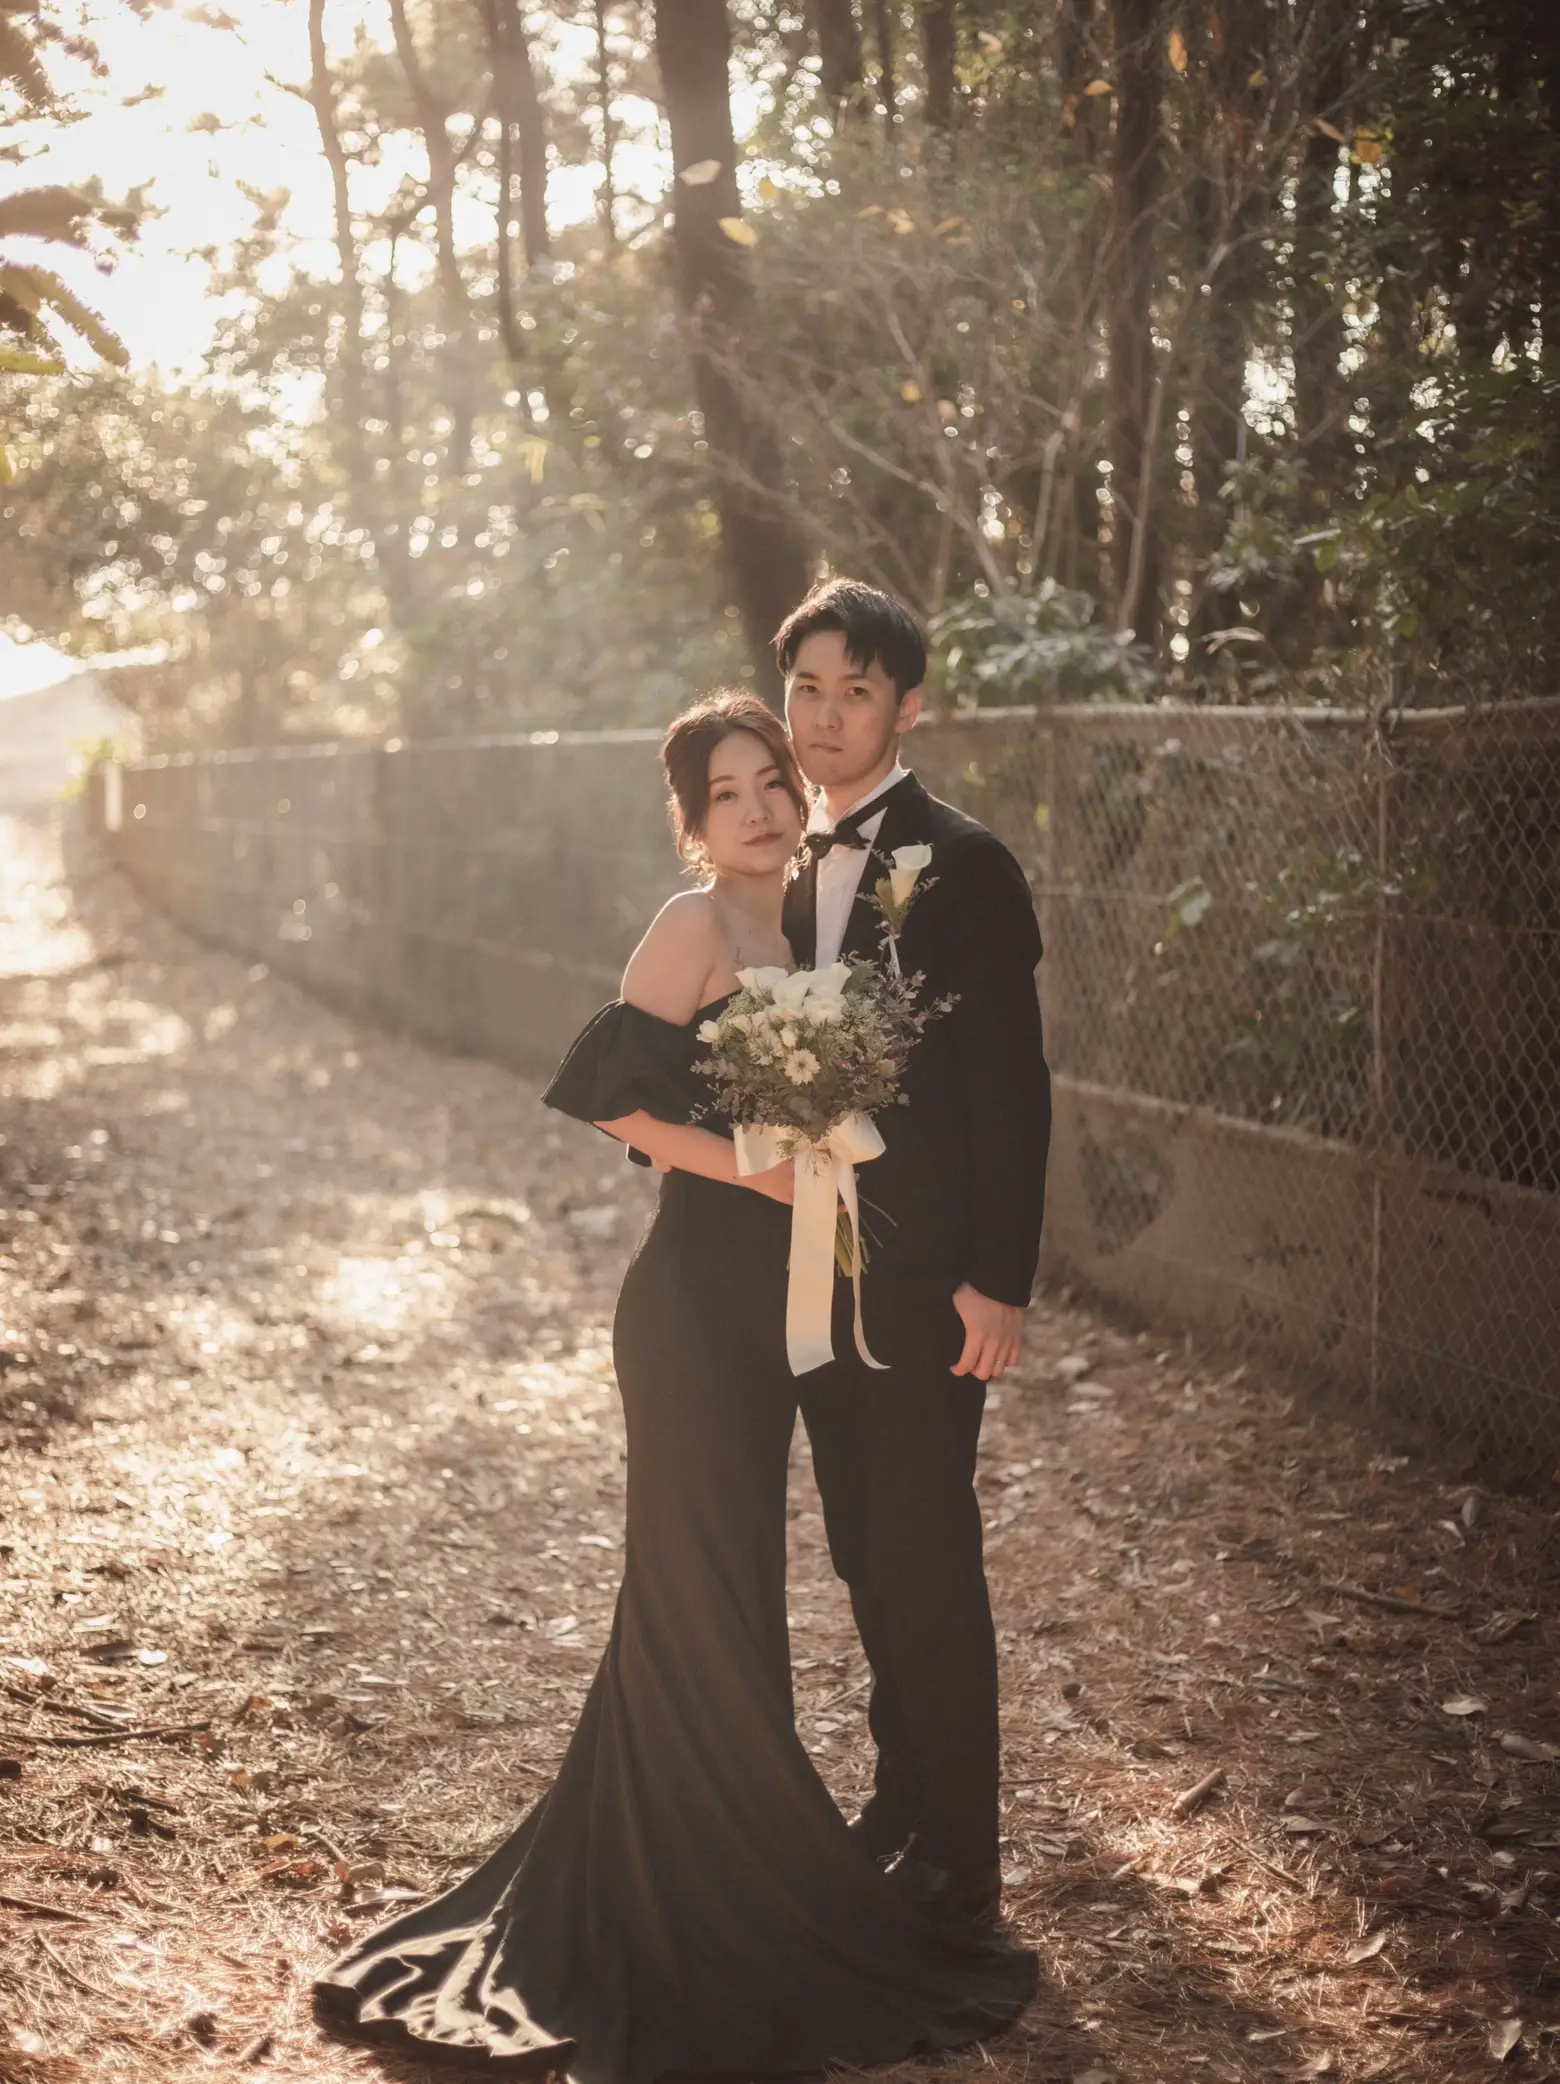 Chiba 】 Chic wedding photo in black dress (pre-wedding photo